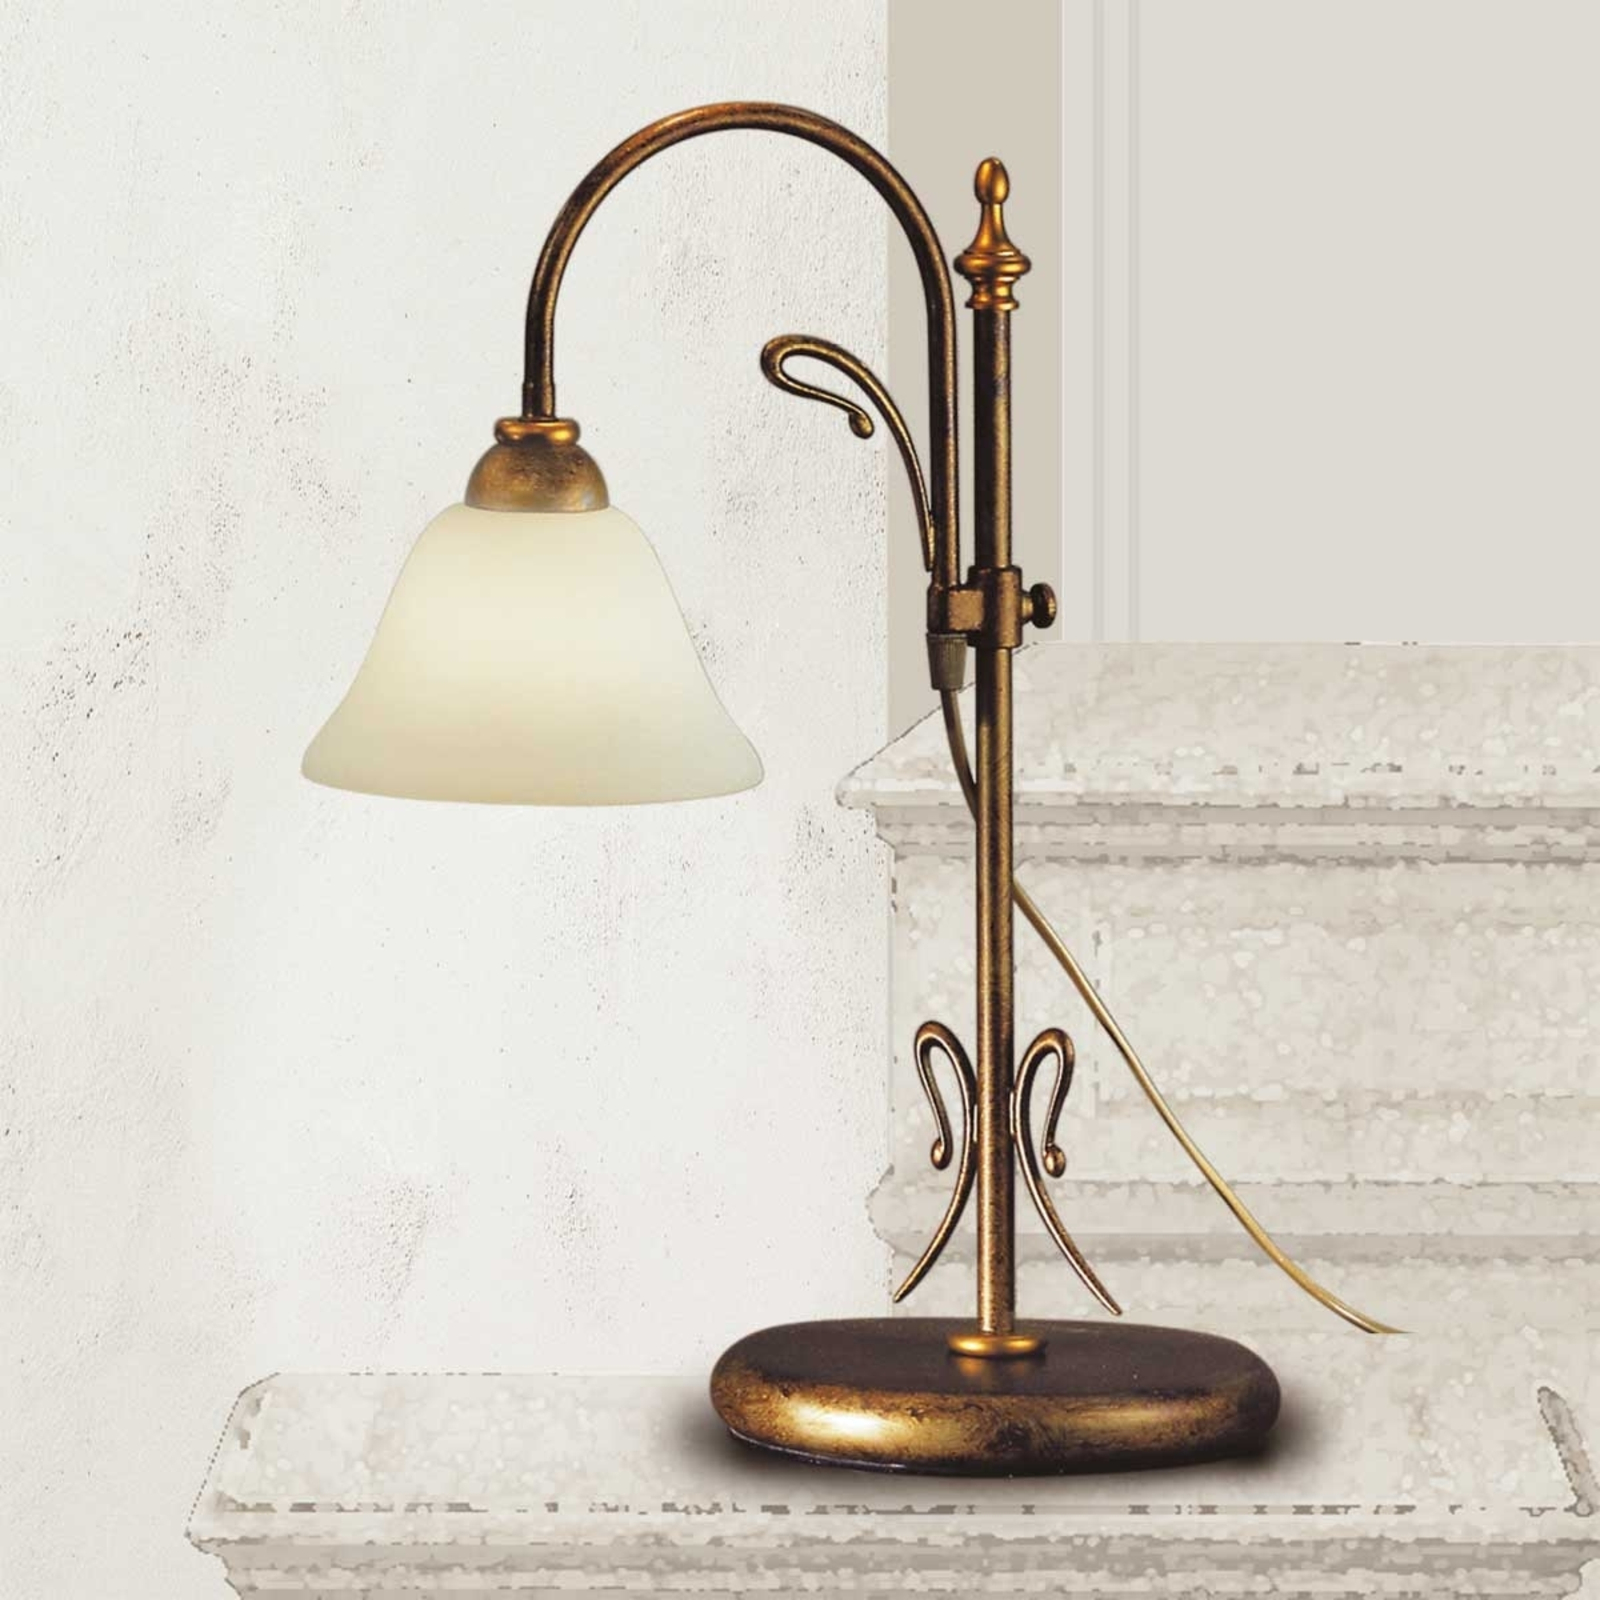 Antonio bordlampe, virker antik. Lampegiganten.dk